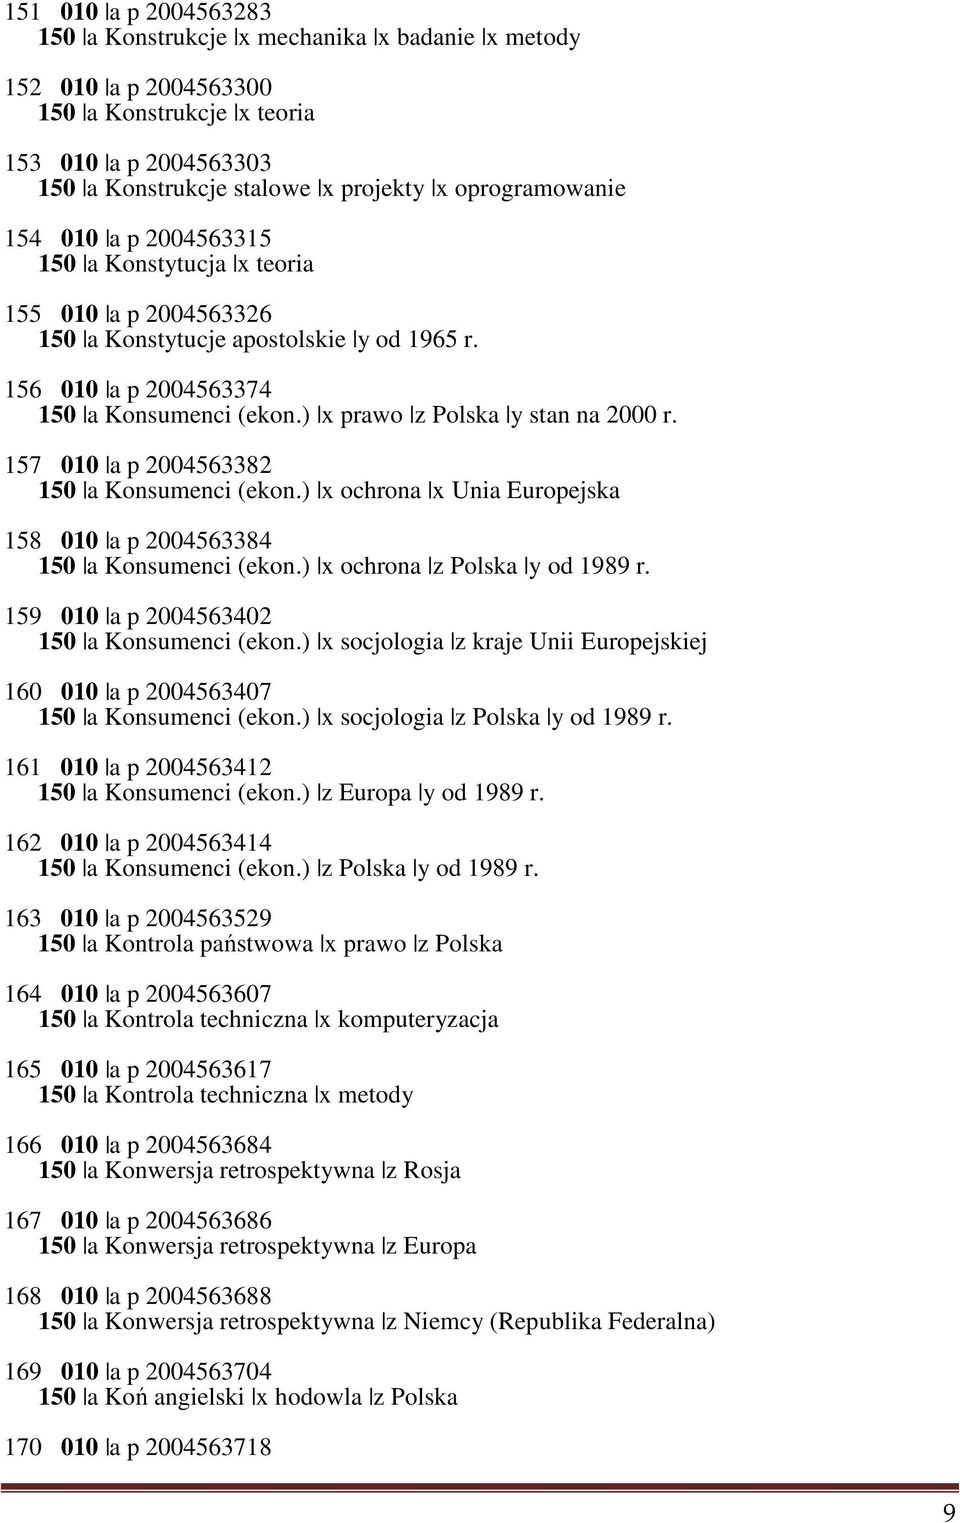 157 010 a p 2004563382 150 a Konsumenci (ekon.) x ochrona x Unia Europejska 158 010 a p 2004563384 150 a Konsumenci (ekon.) x ochrona z Polska y od 1989 r.